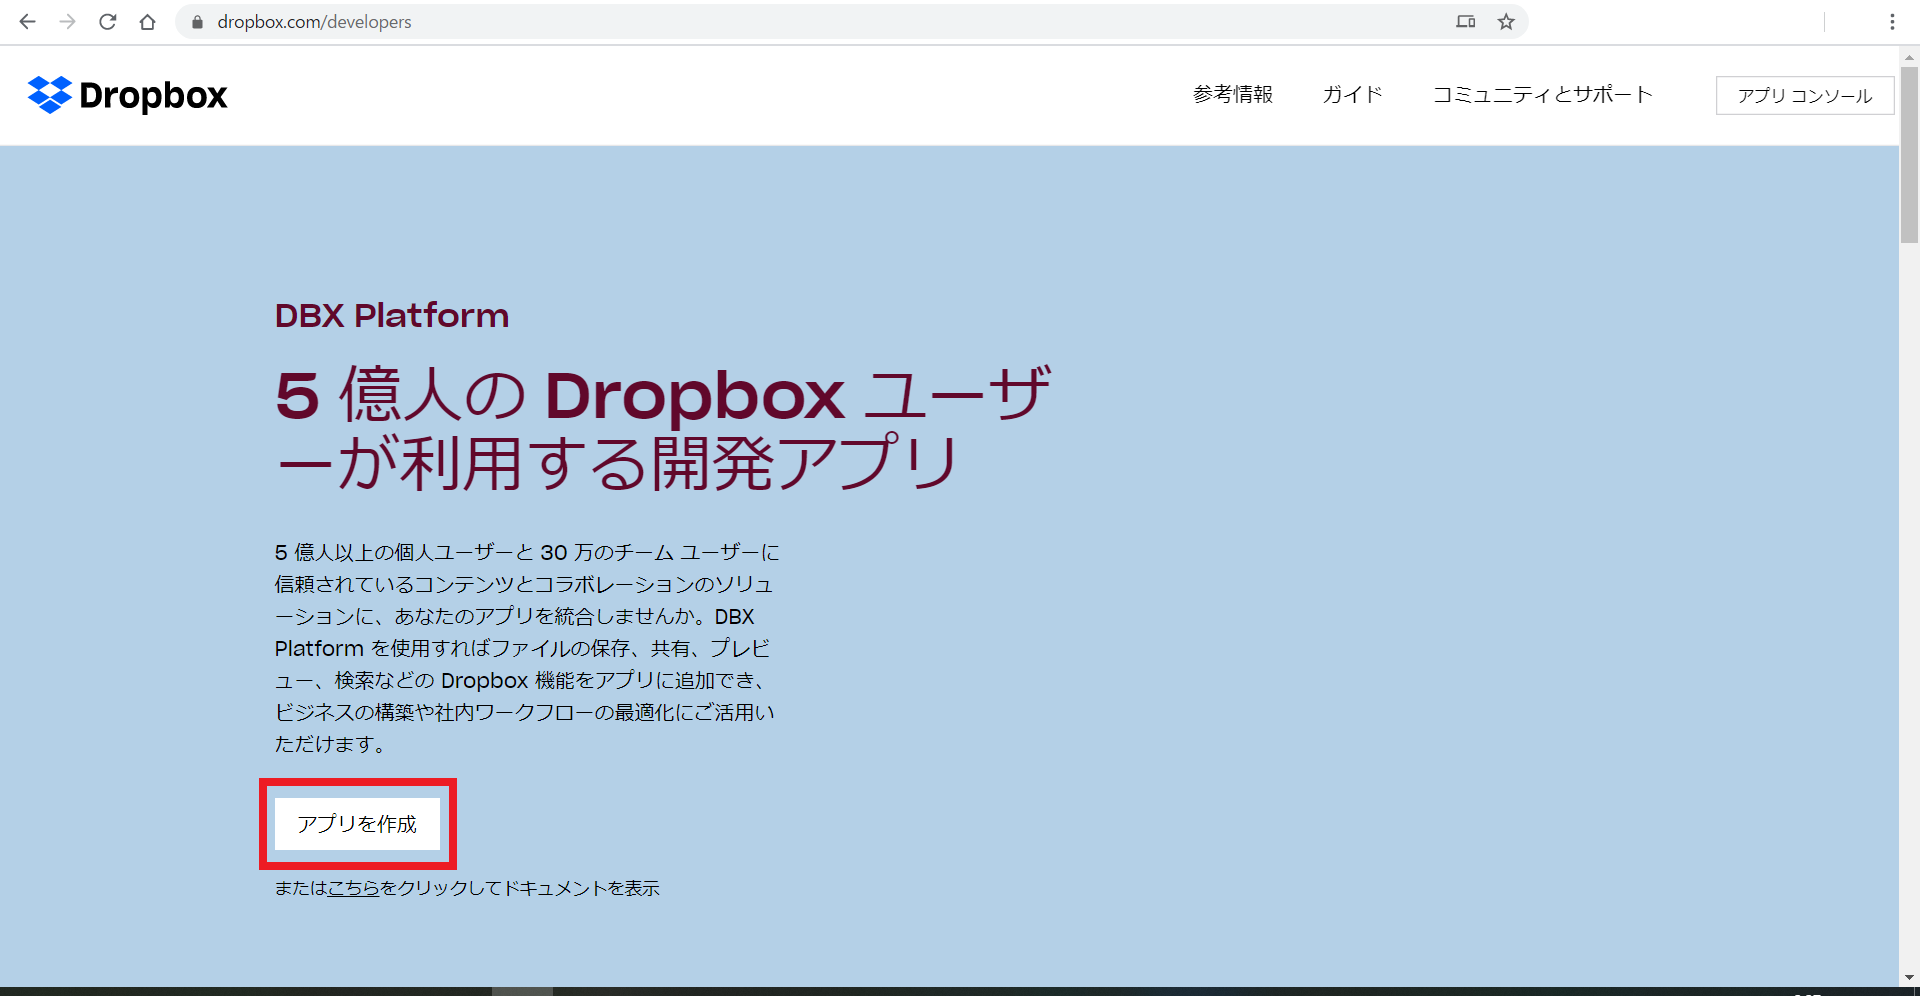 Dropbox_developers.png